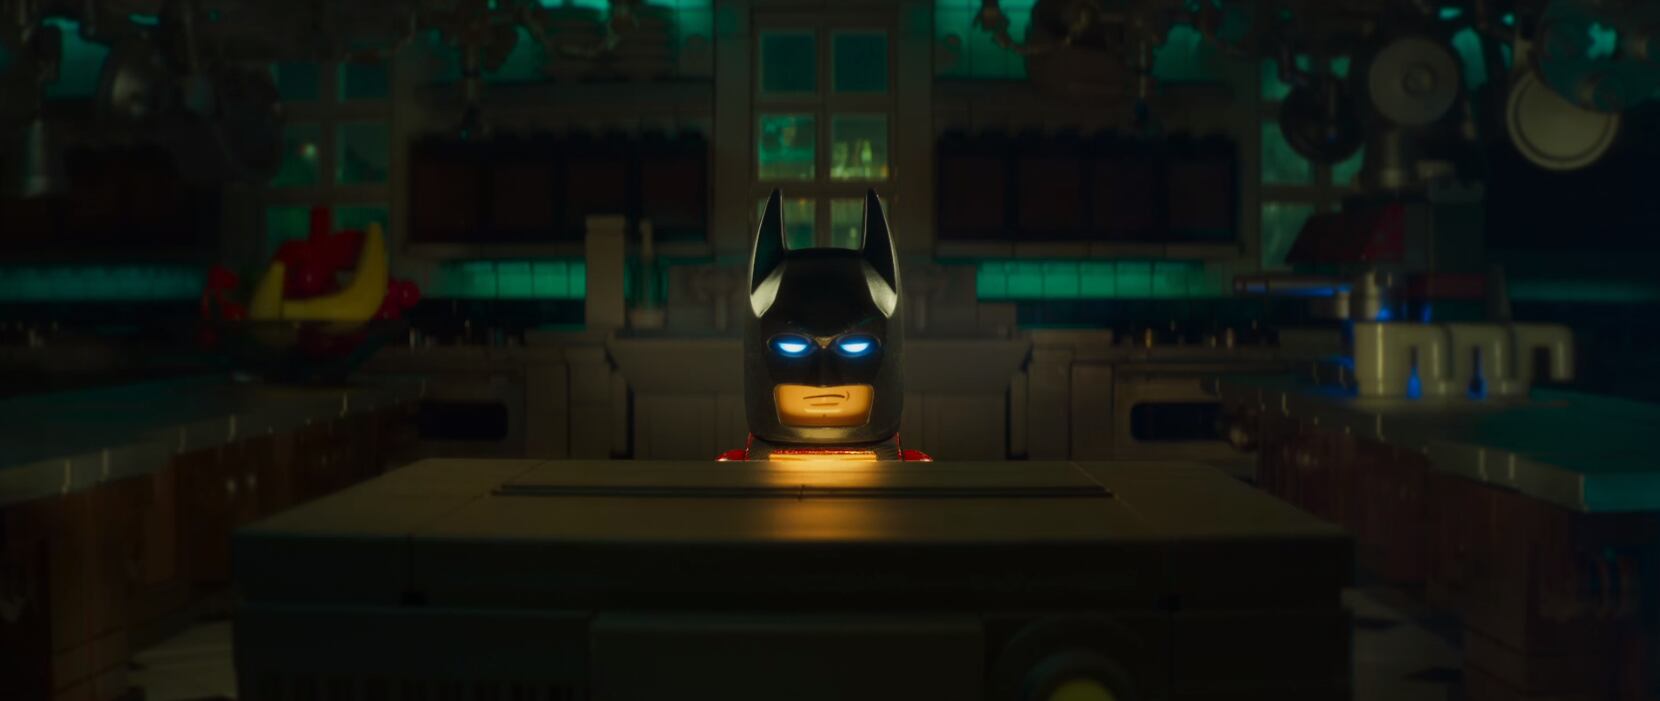 Will Arnett - The LEGO Batman Movie trailer coming soon